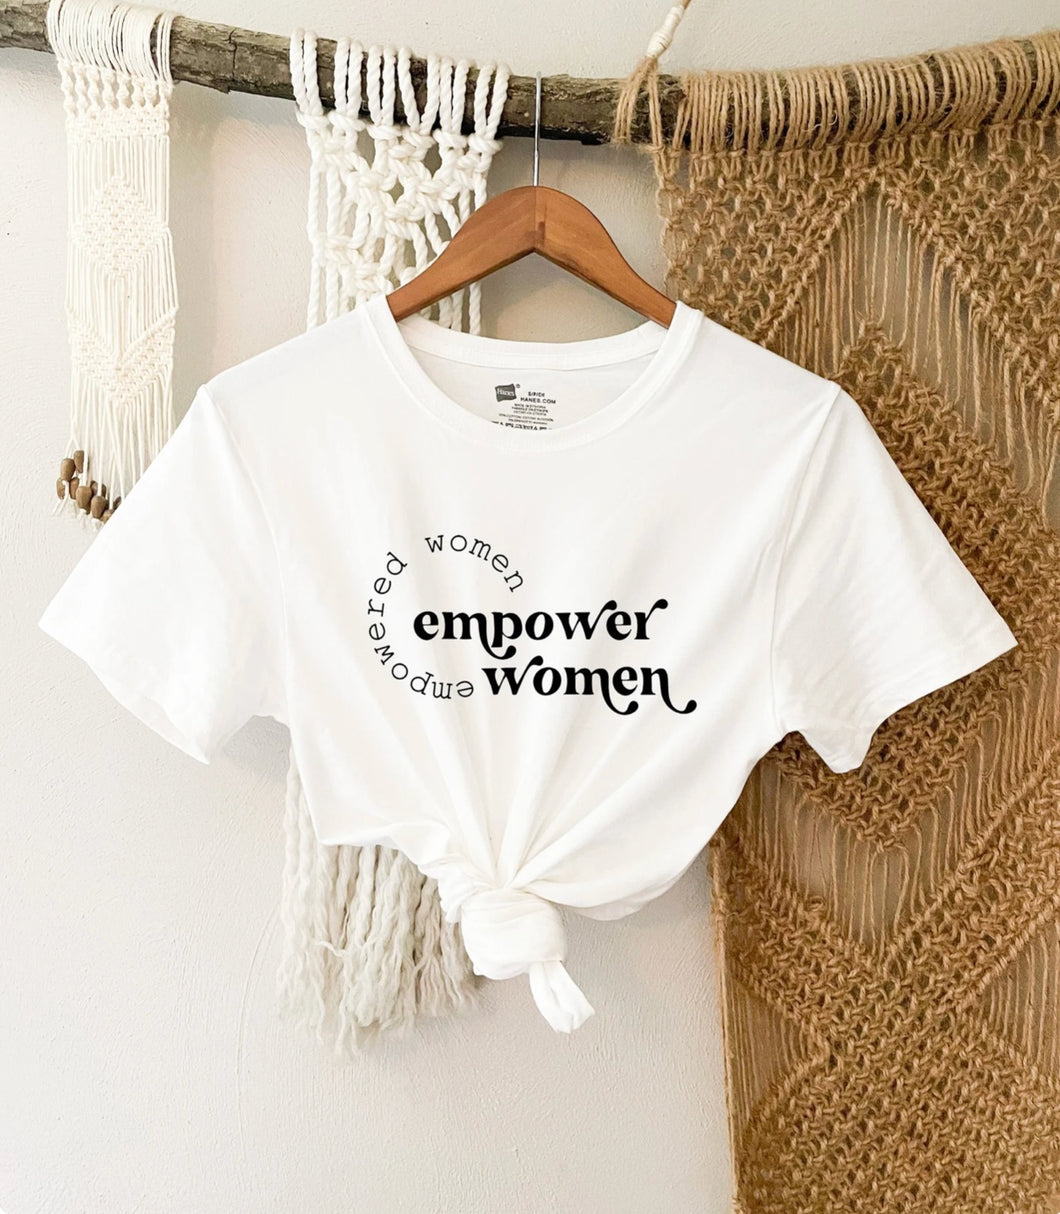 Empowered women empower women T-shirt